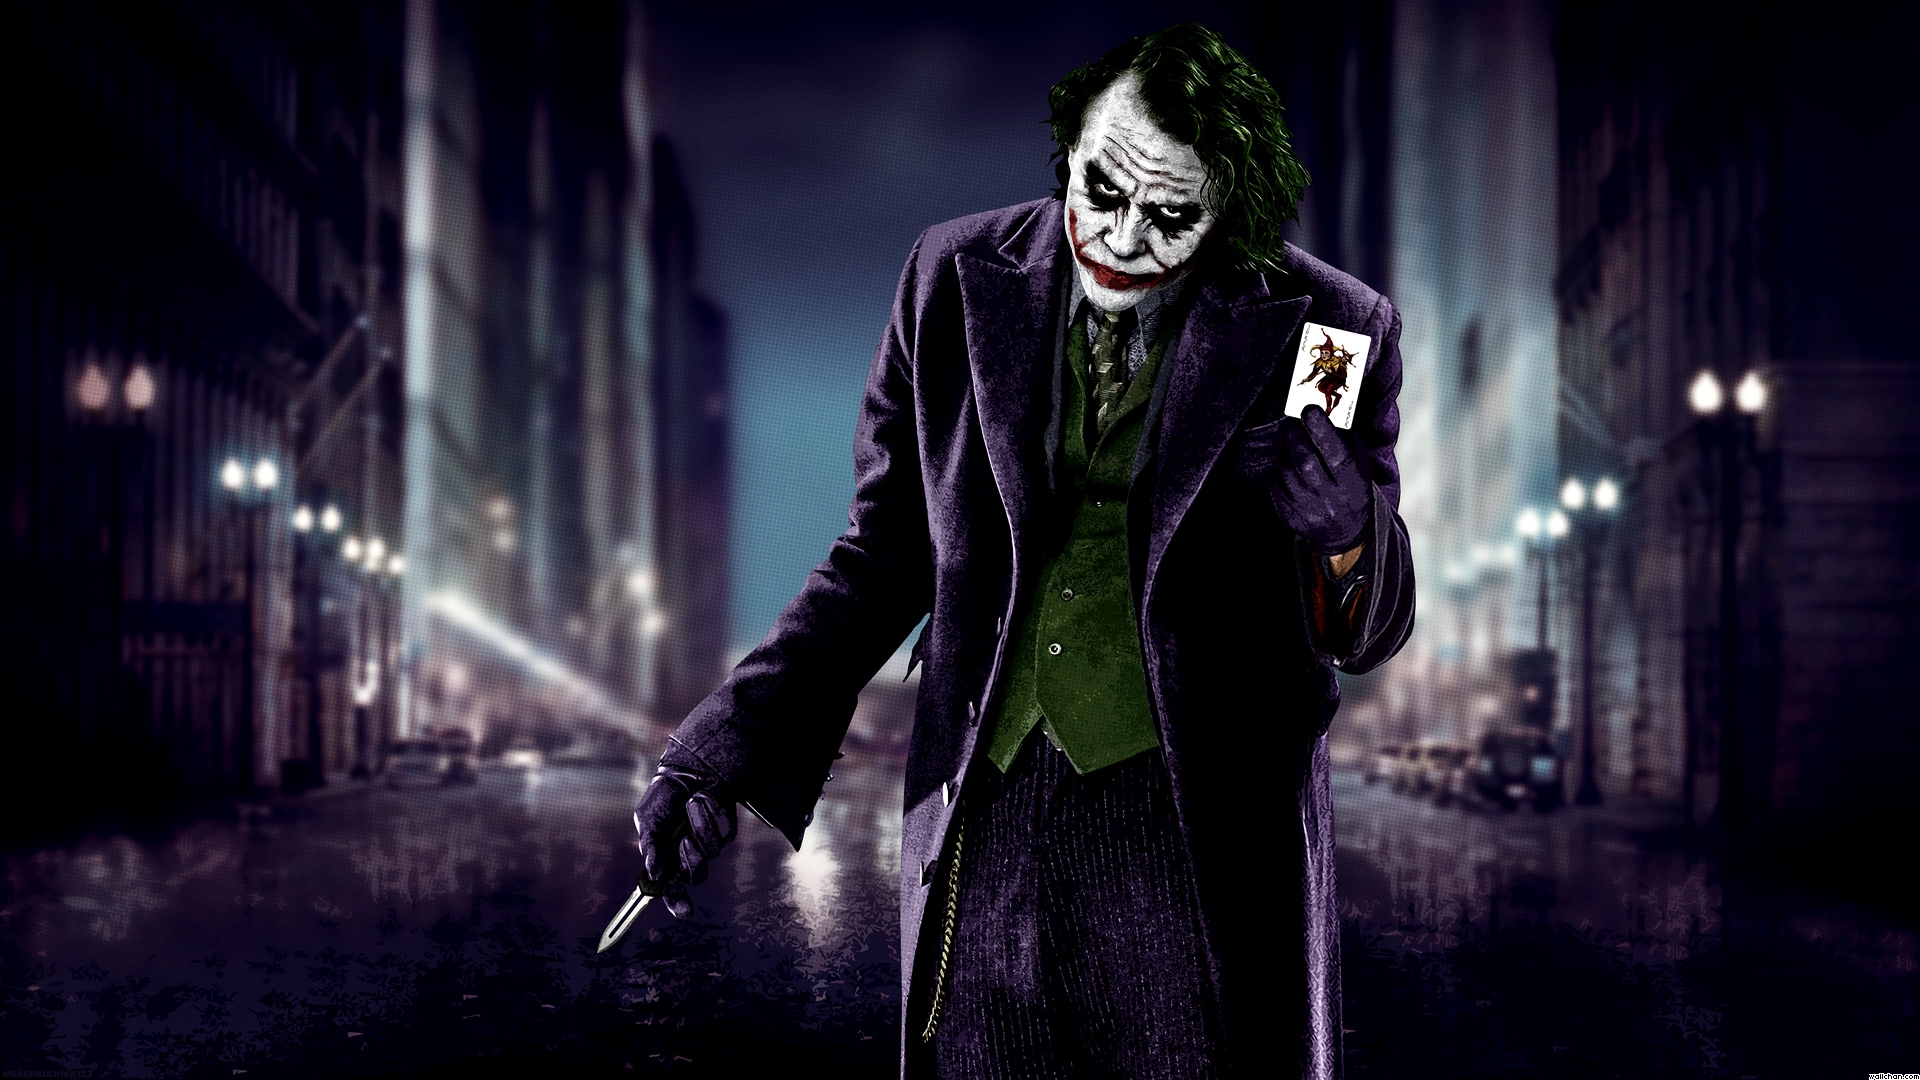 Batman Joker Wallpaper Ing Gallery